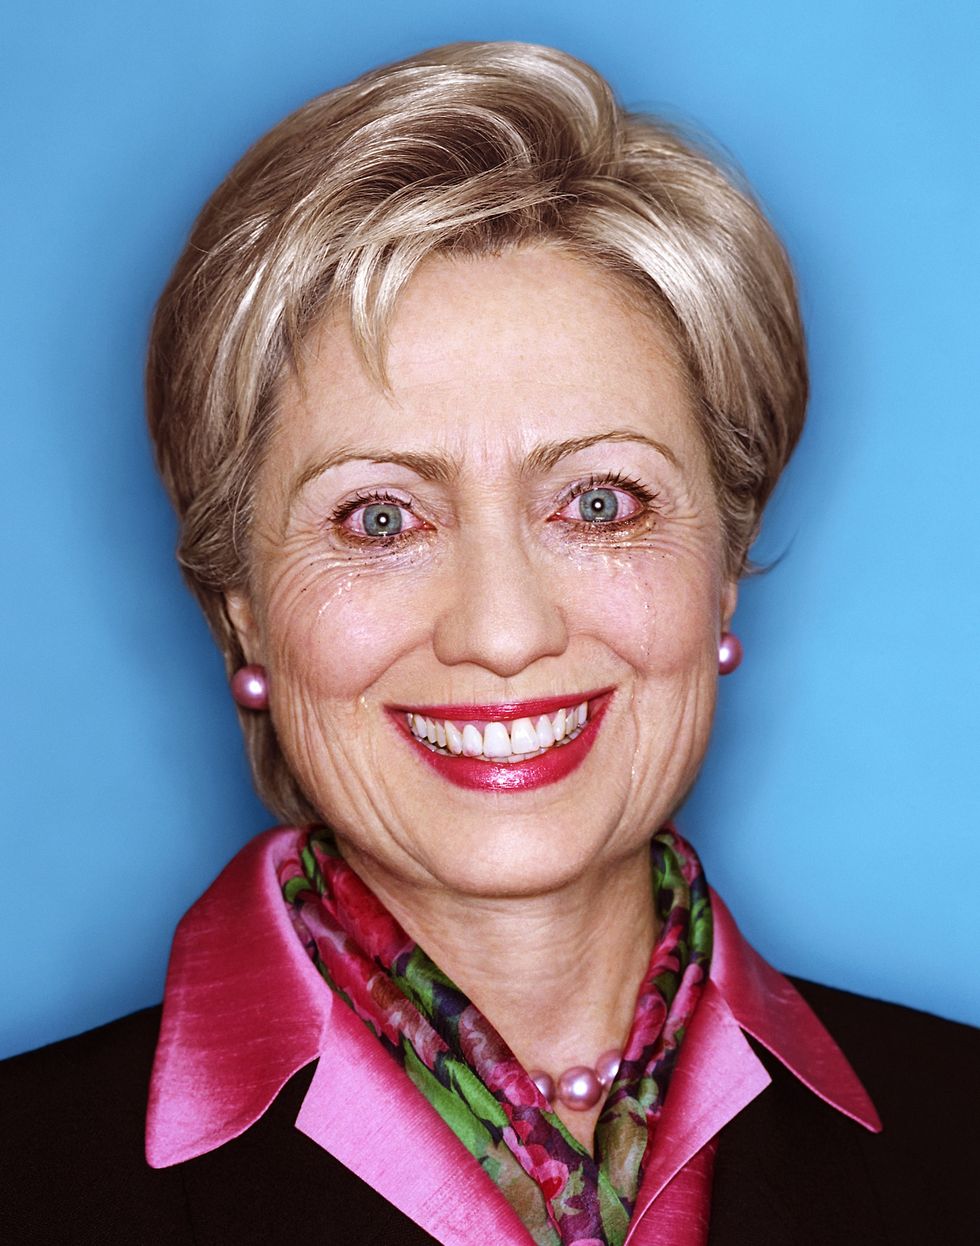 David LaChapelle, Hillary Clinton